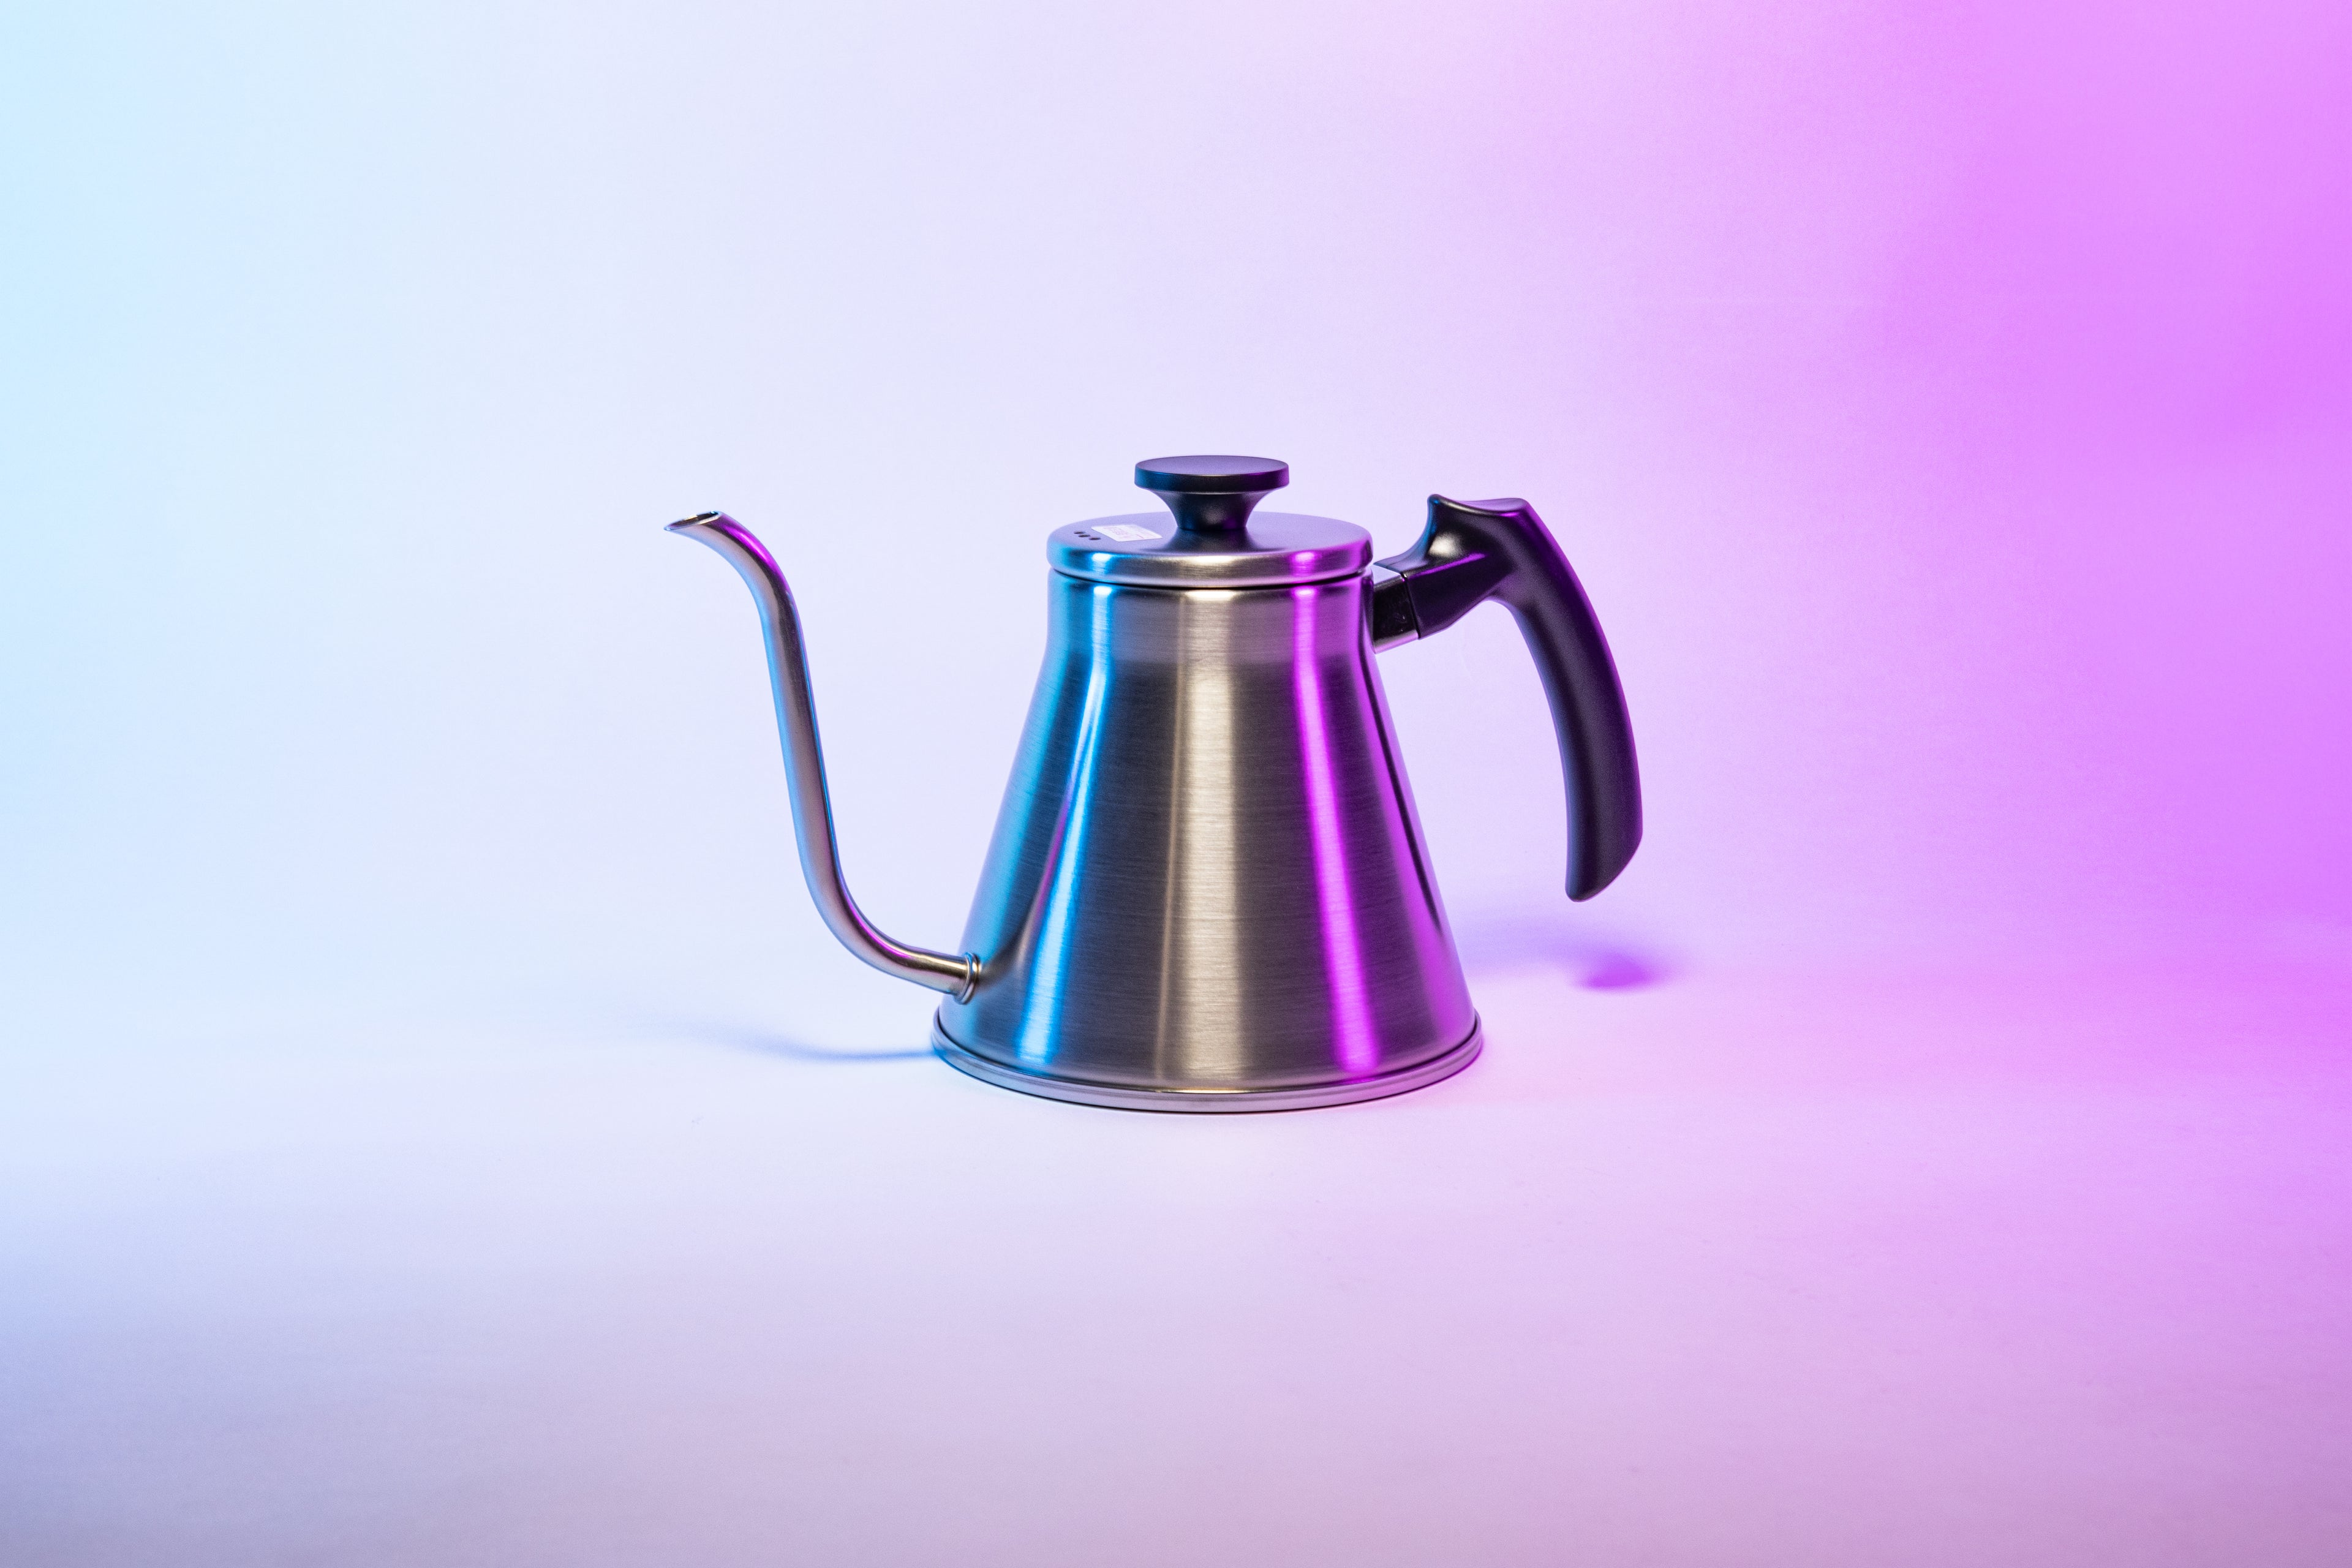 Stainless steel kettle with gooseneck spout, sloped black plastic handle and flat, black plastic lid knob set against a purple gradient background.